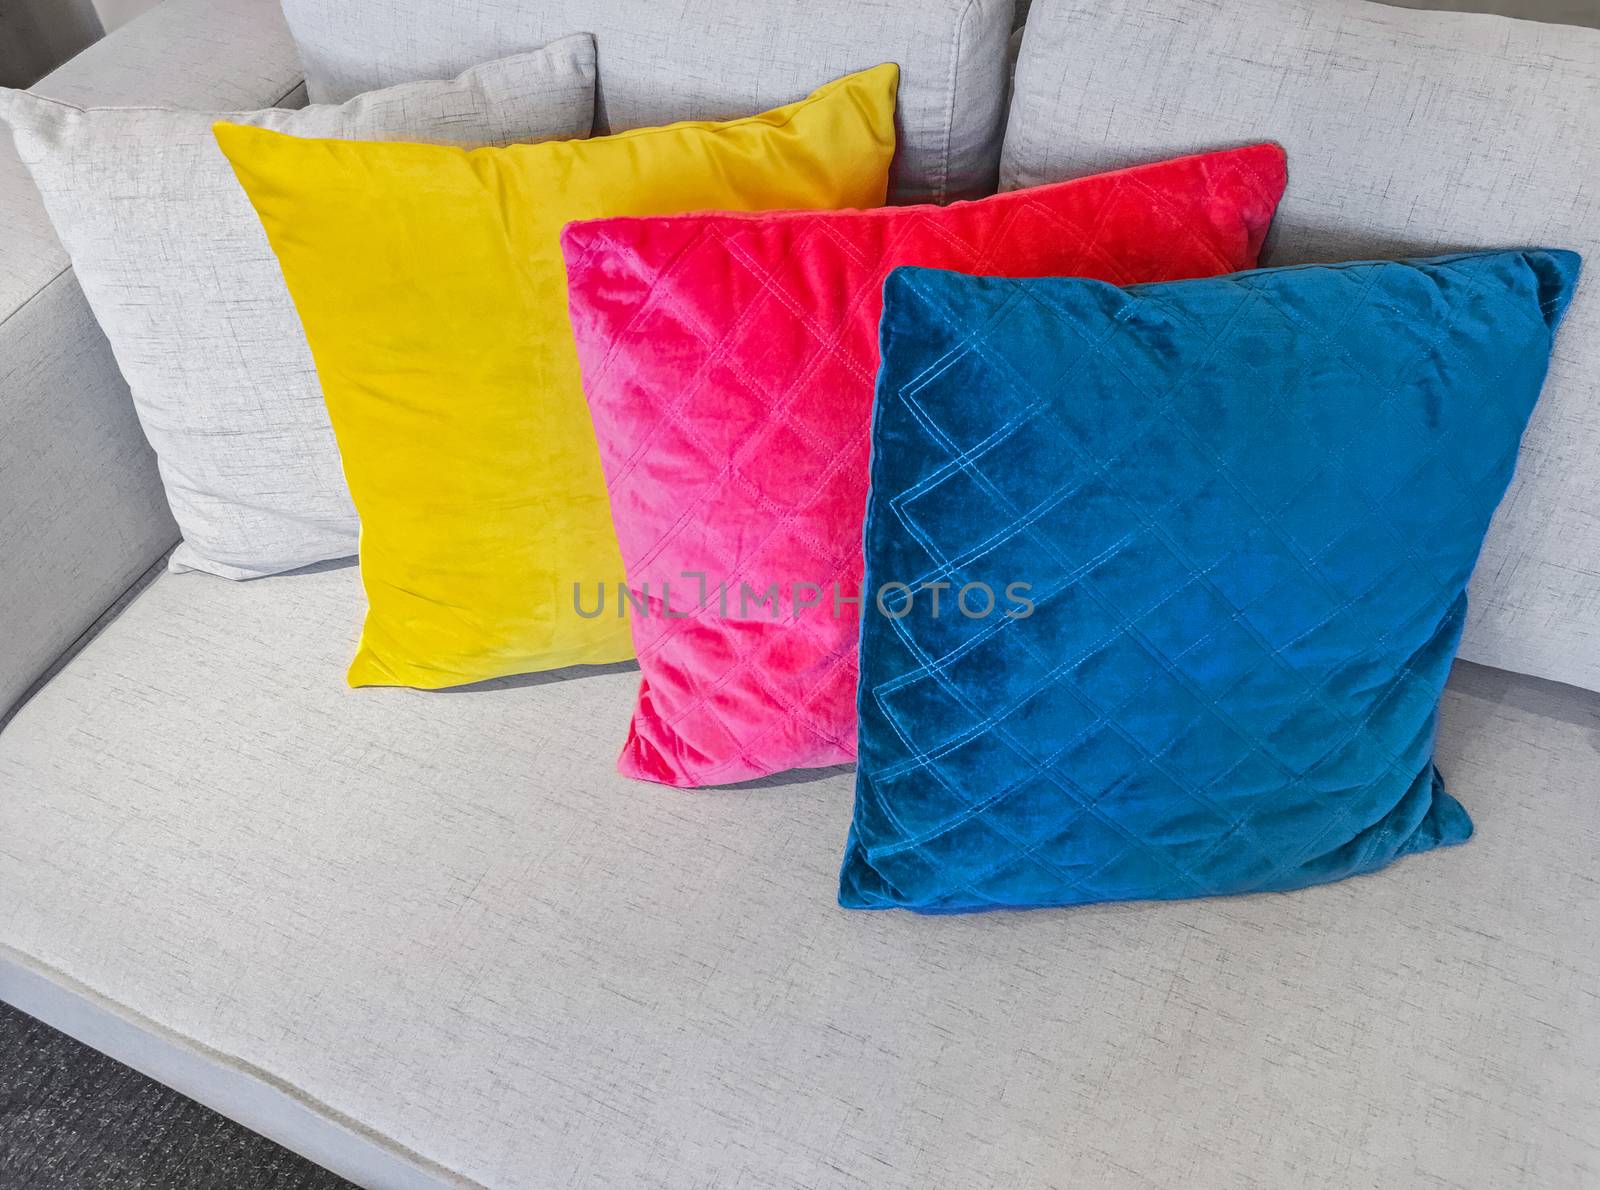 Multicolored cushions decorating a gray sofa by anikasalsera